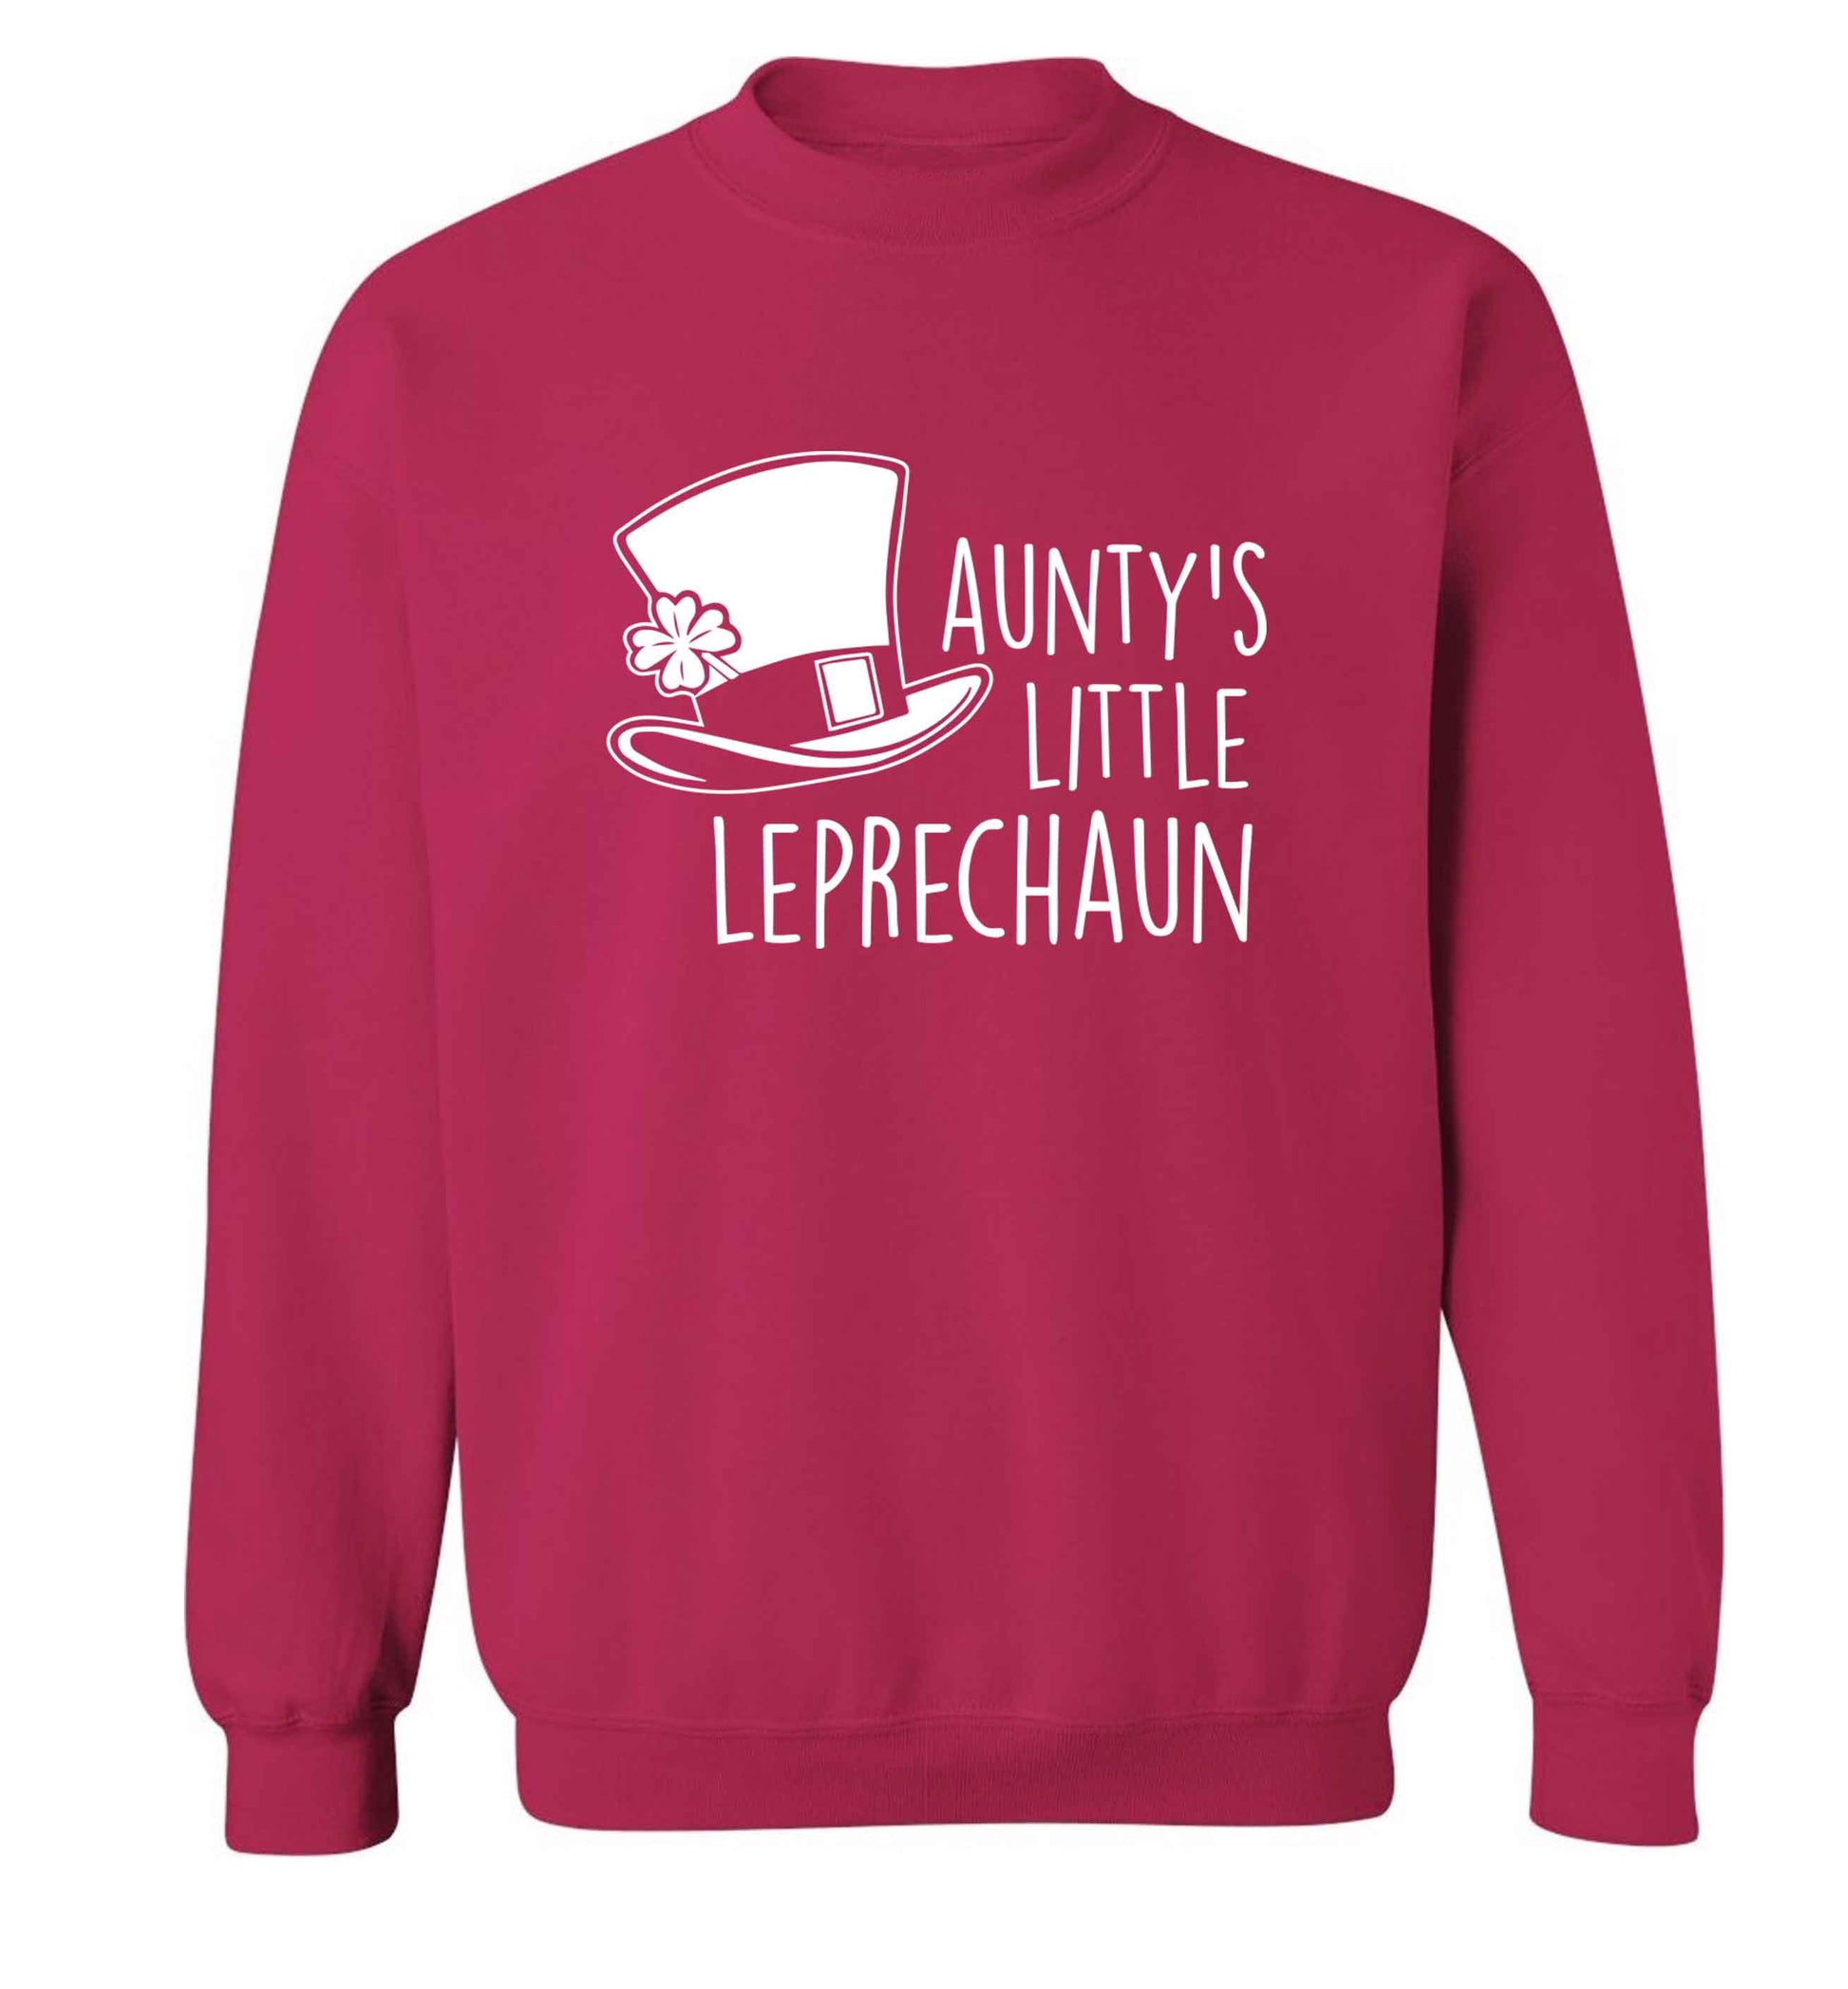 Aunty's little leprechaun adult's unisex pink sweater 2XL